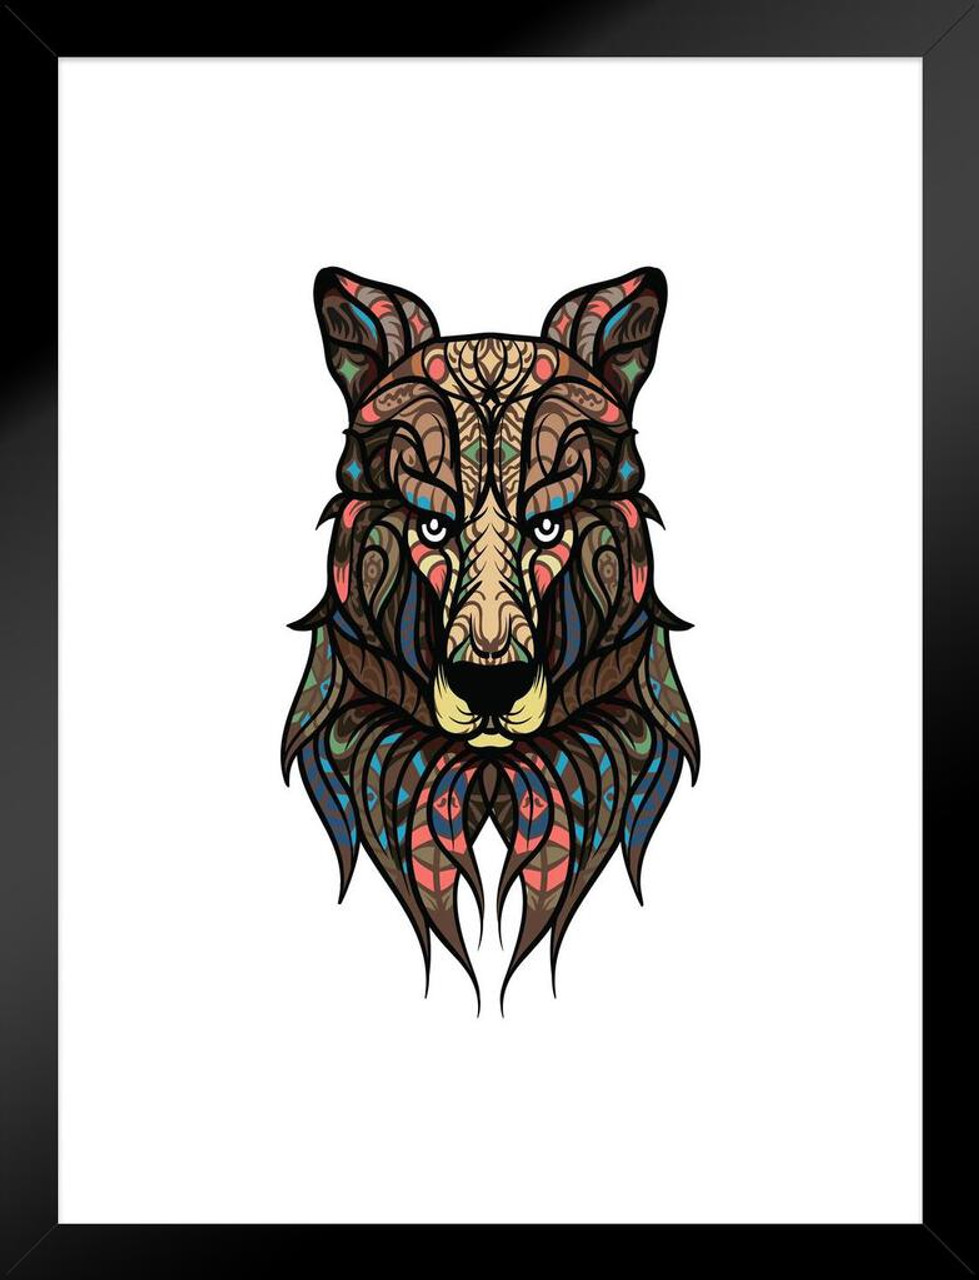 Wolf head by Zach Black at Black Dawn Tattoo in Milwaukee, WI : r/tattoos